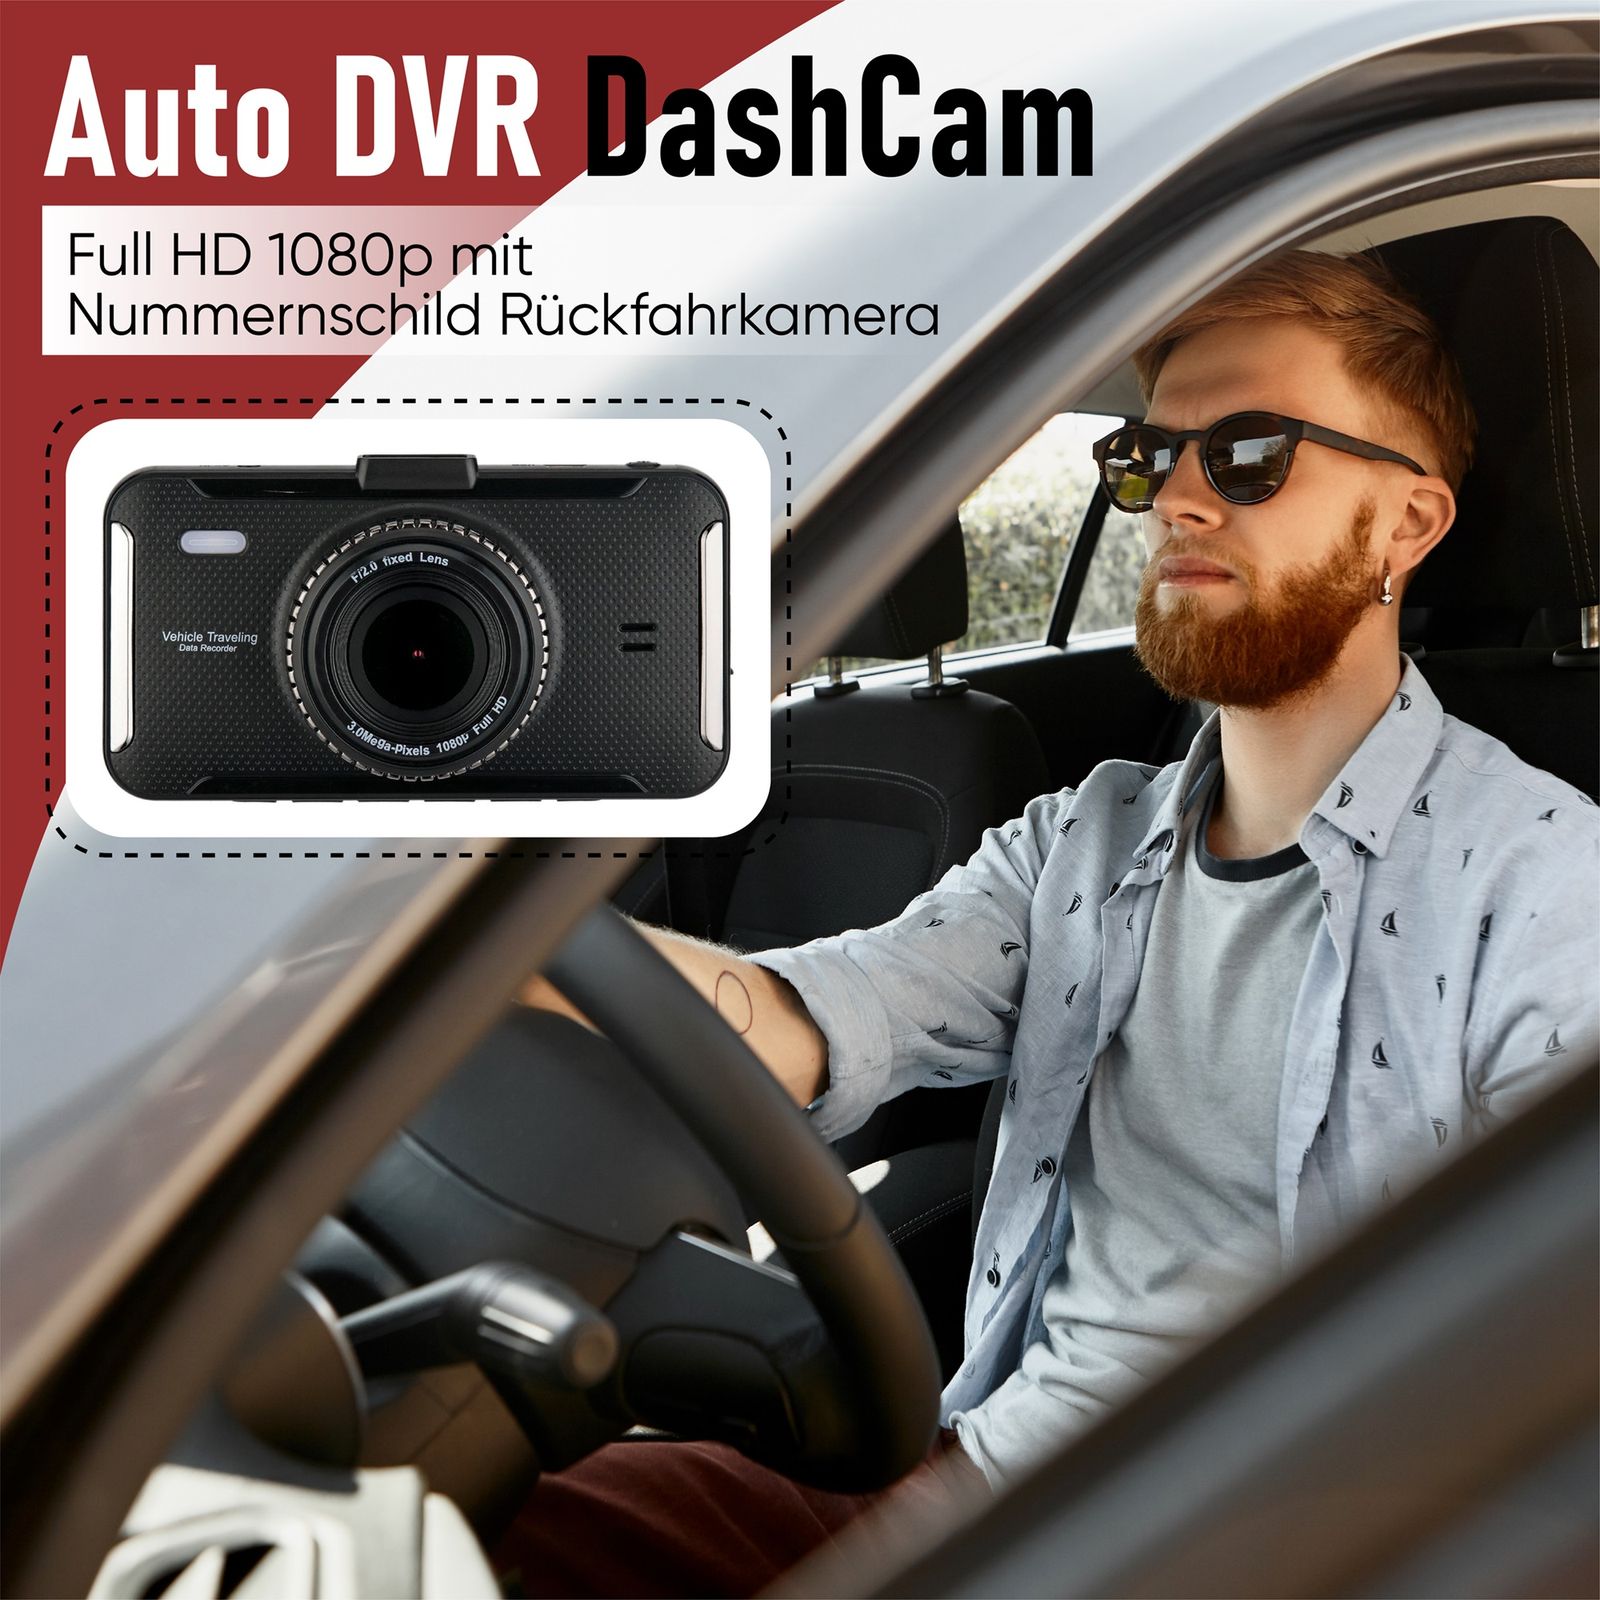 CARMATRIX Auto DashCam Full HD 1080p mit Rückfahrkamera im Nummernschild  G-Sensor WDR ADAS LDWS Parküberwachung